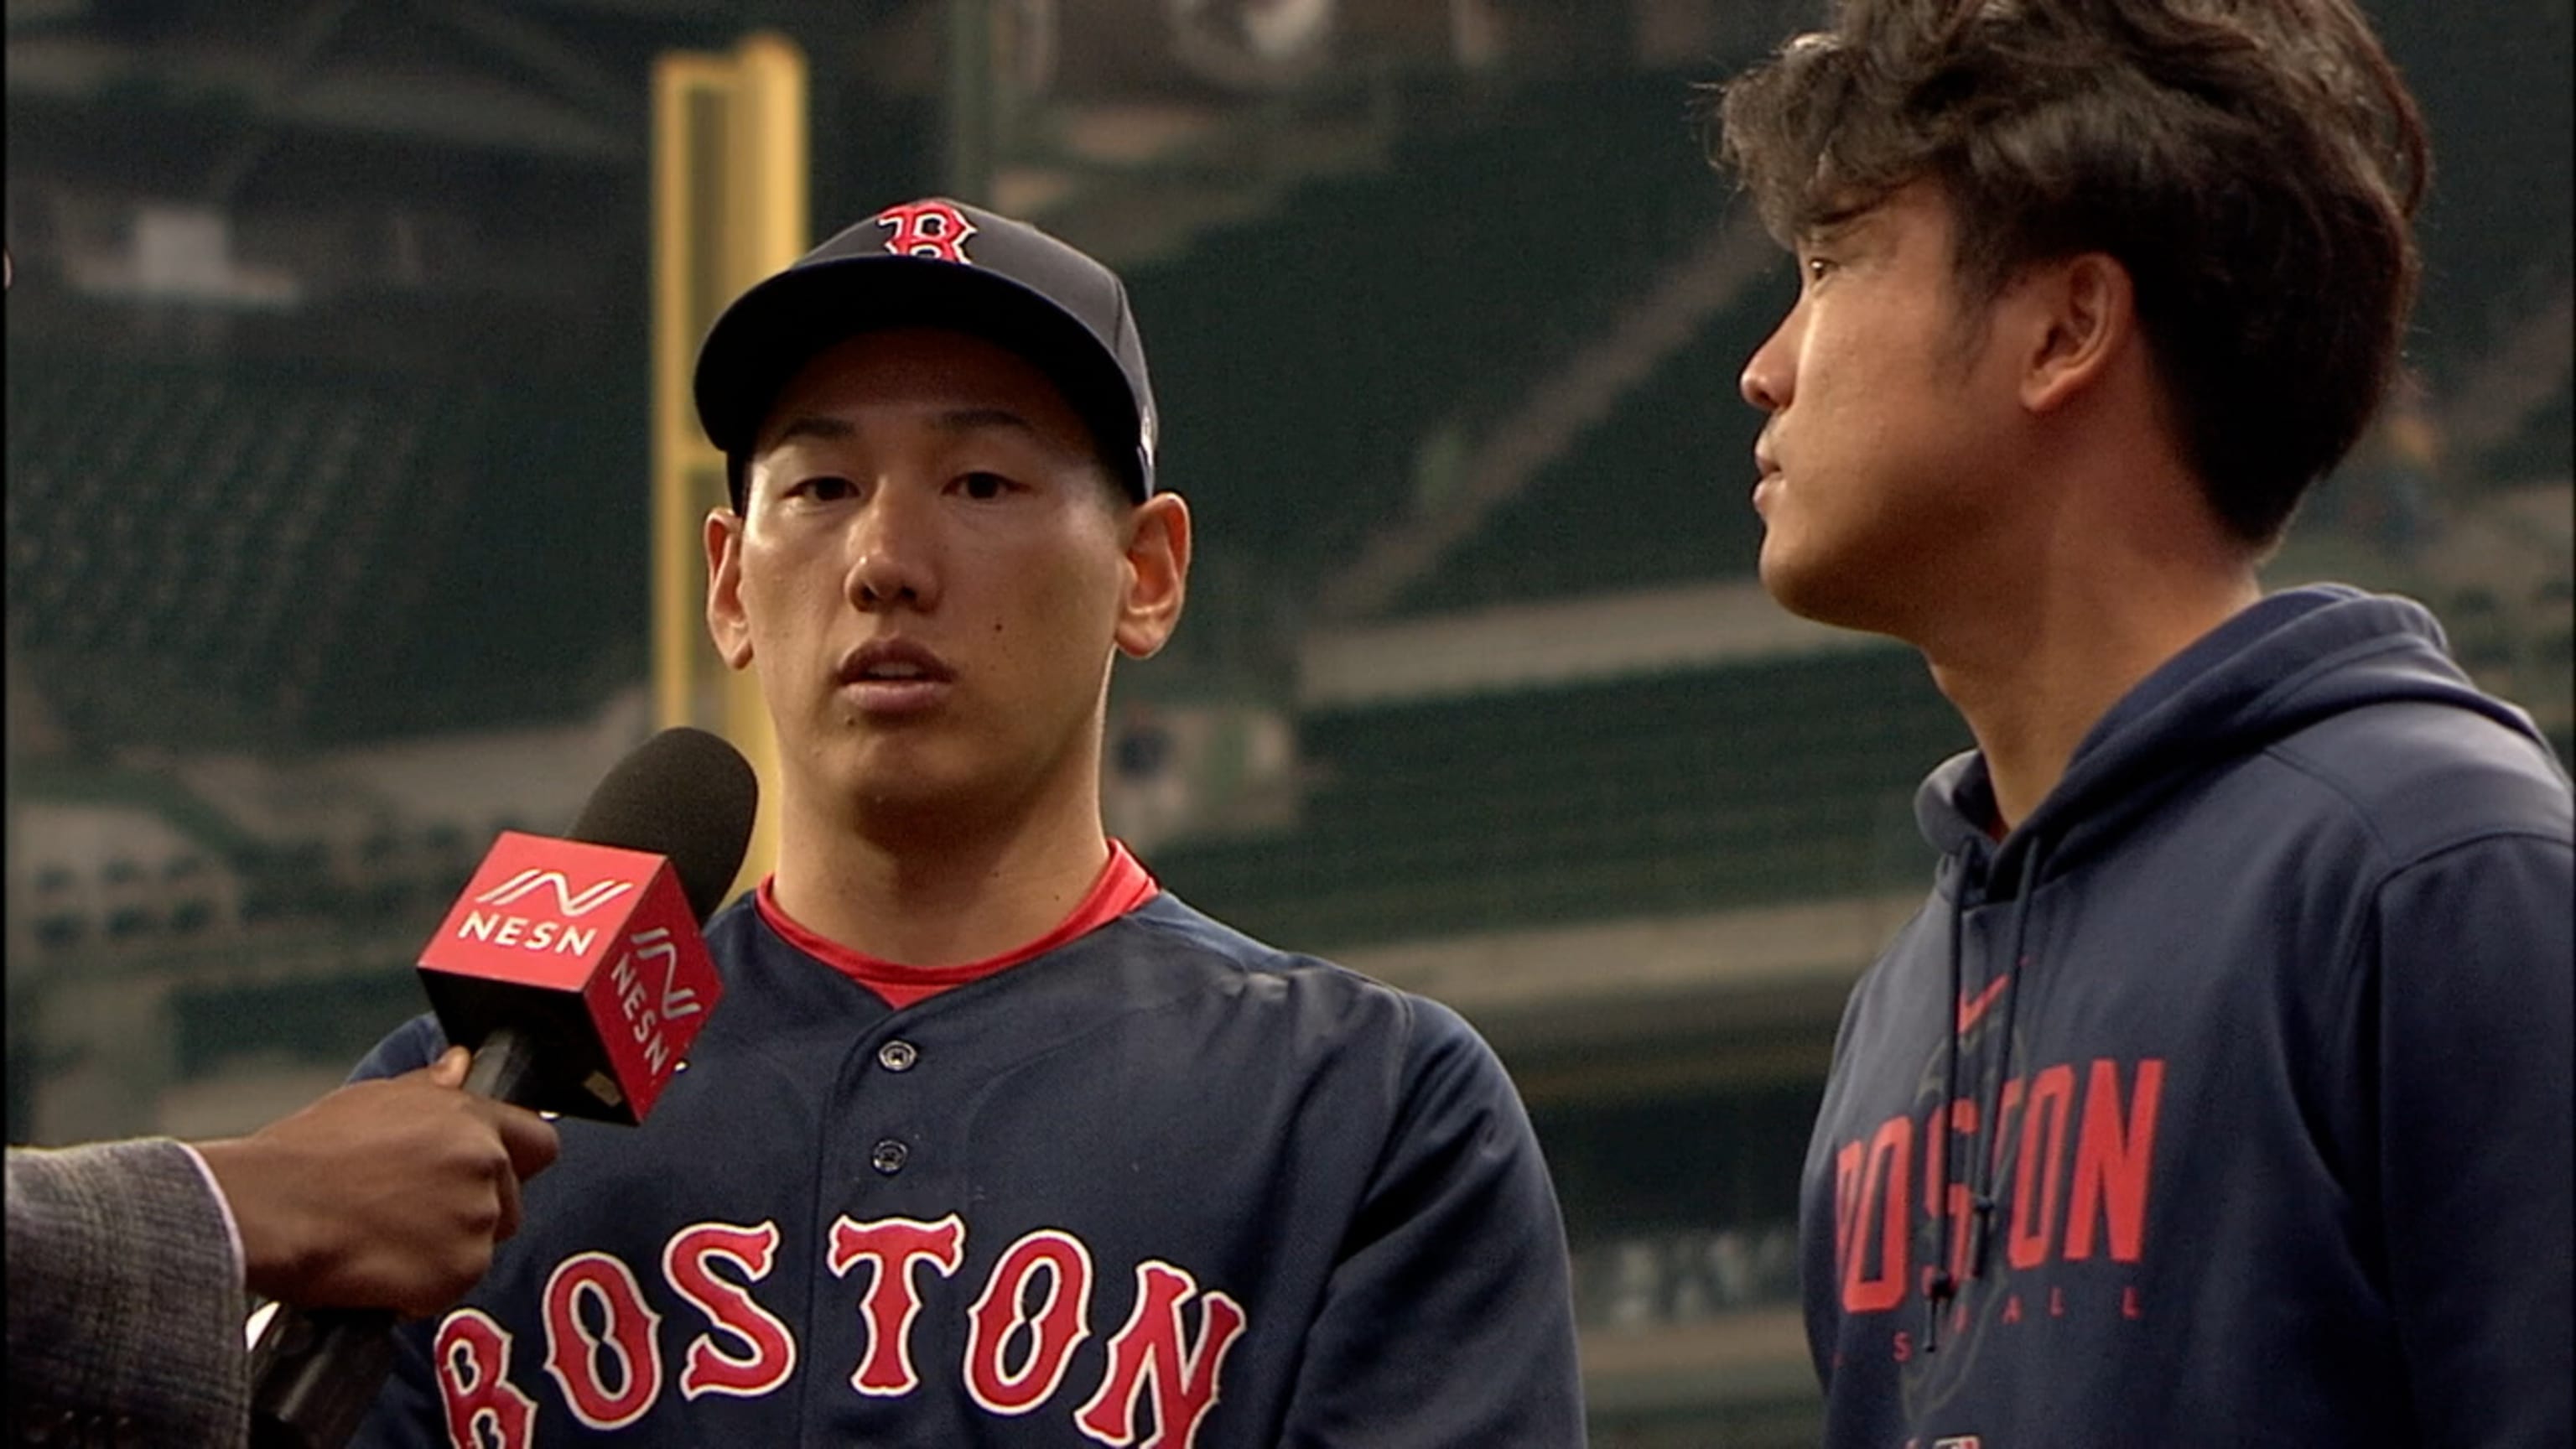 Red Sox's Masataka Yoshida hits first MLB home run vs. Pirates